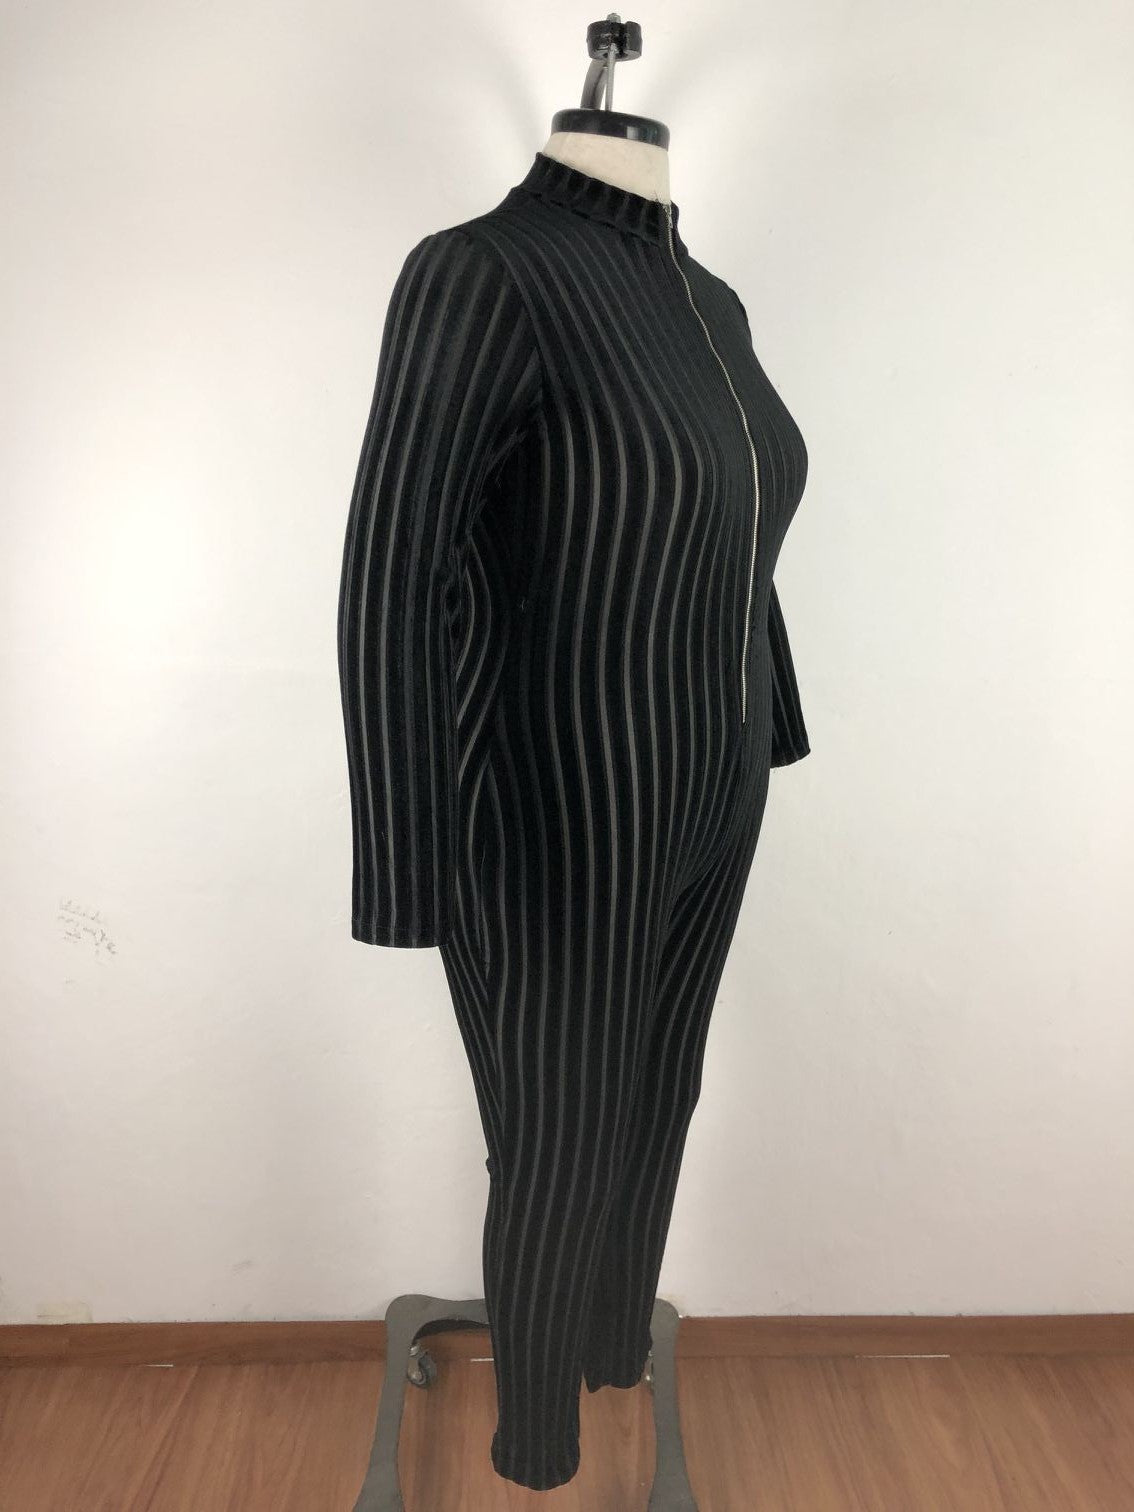 BamBam Plus Size Women'S Mesh Flocked Stripe Tight Fitting Zip Long Sleeve Jumpsuit - BamBam Clothing